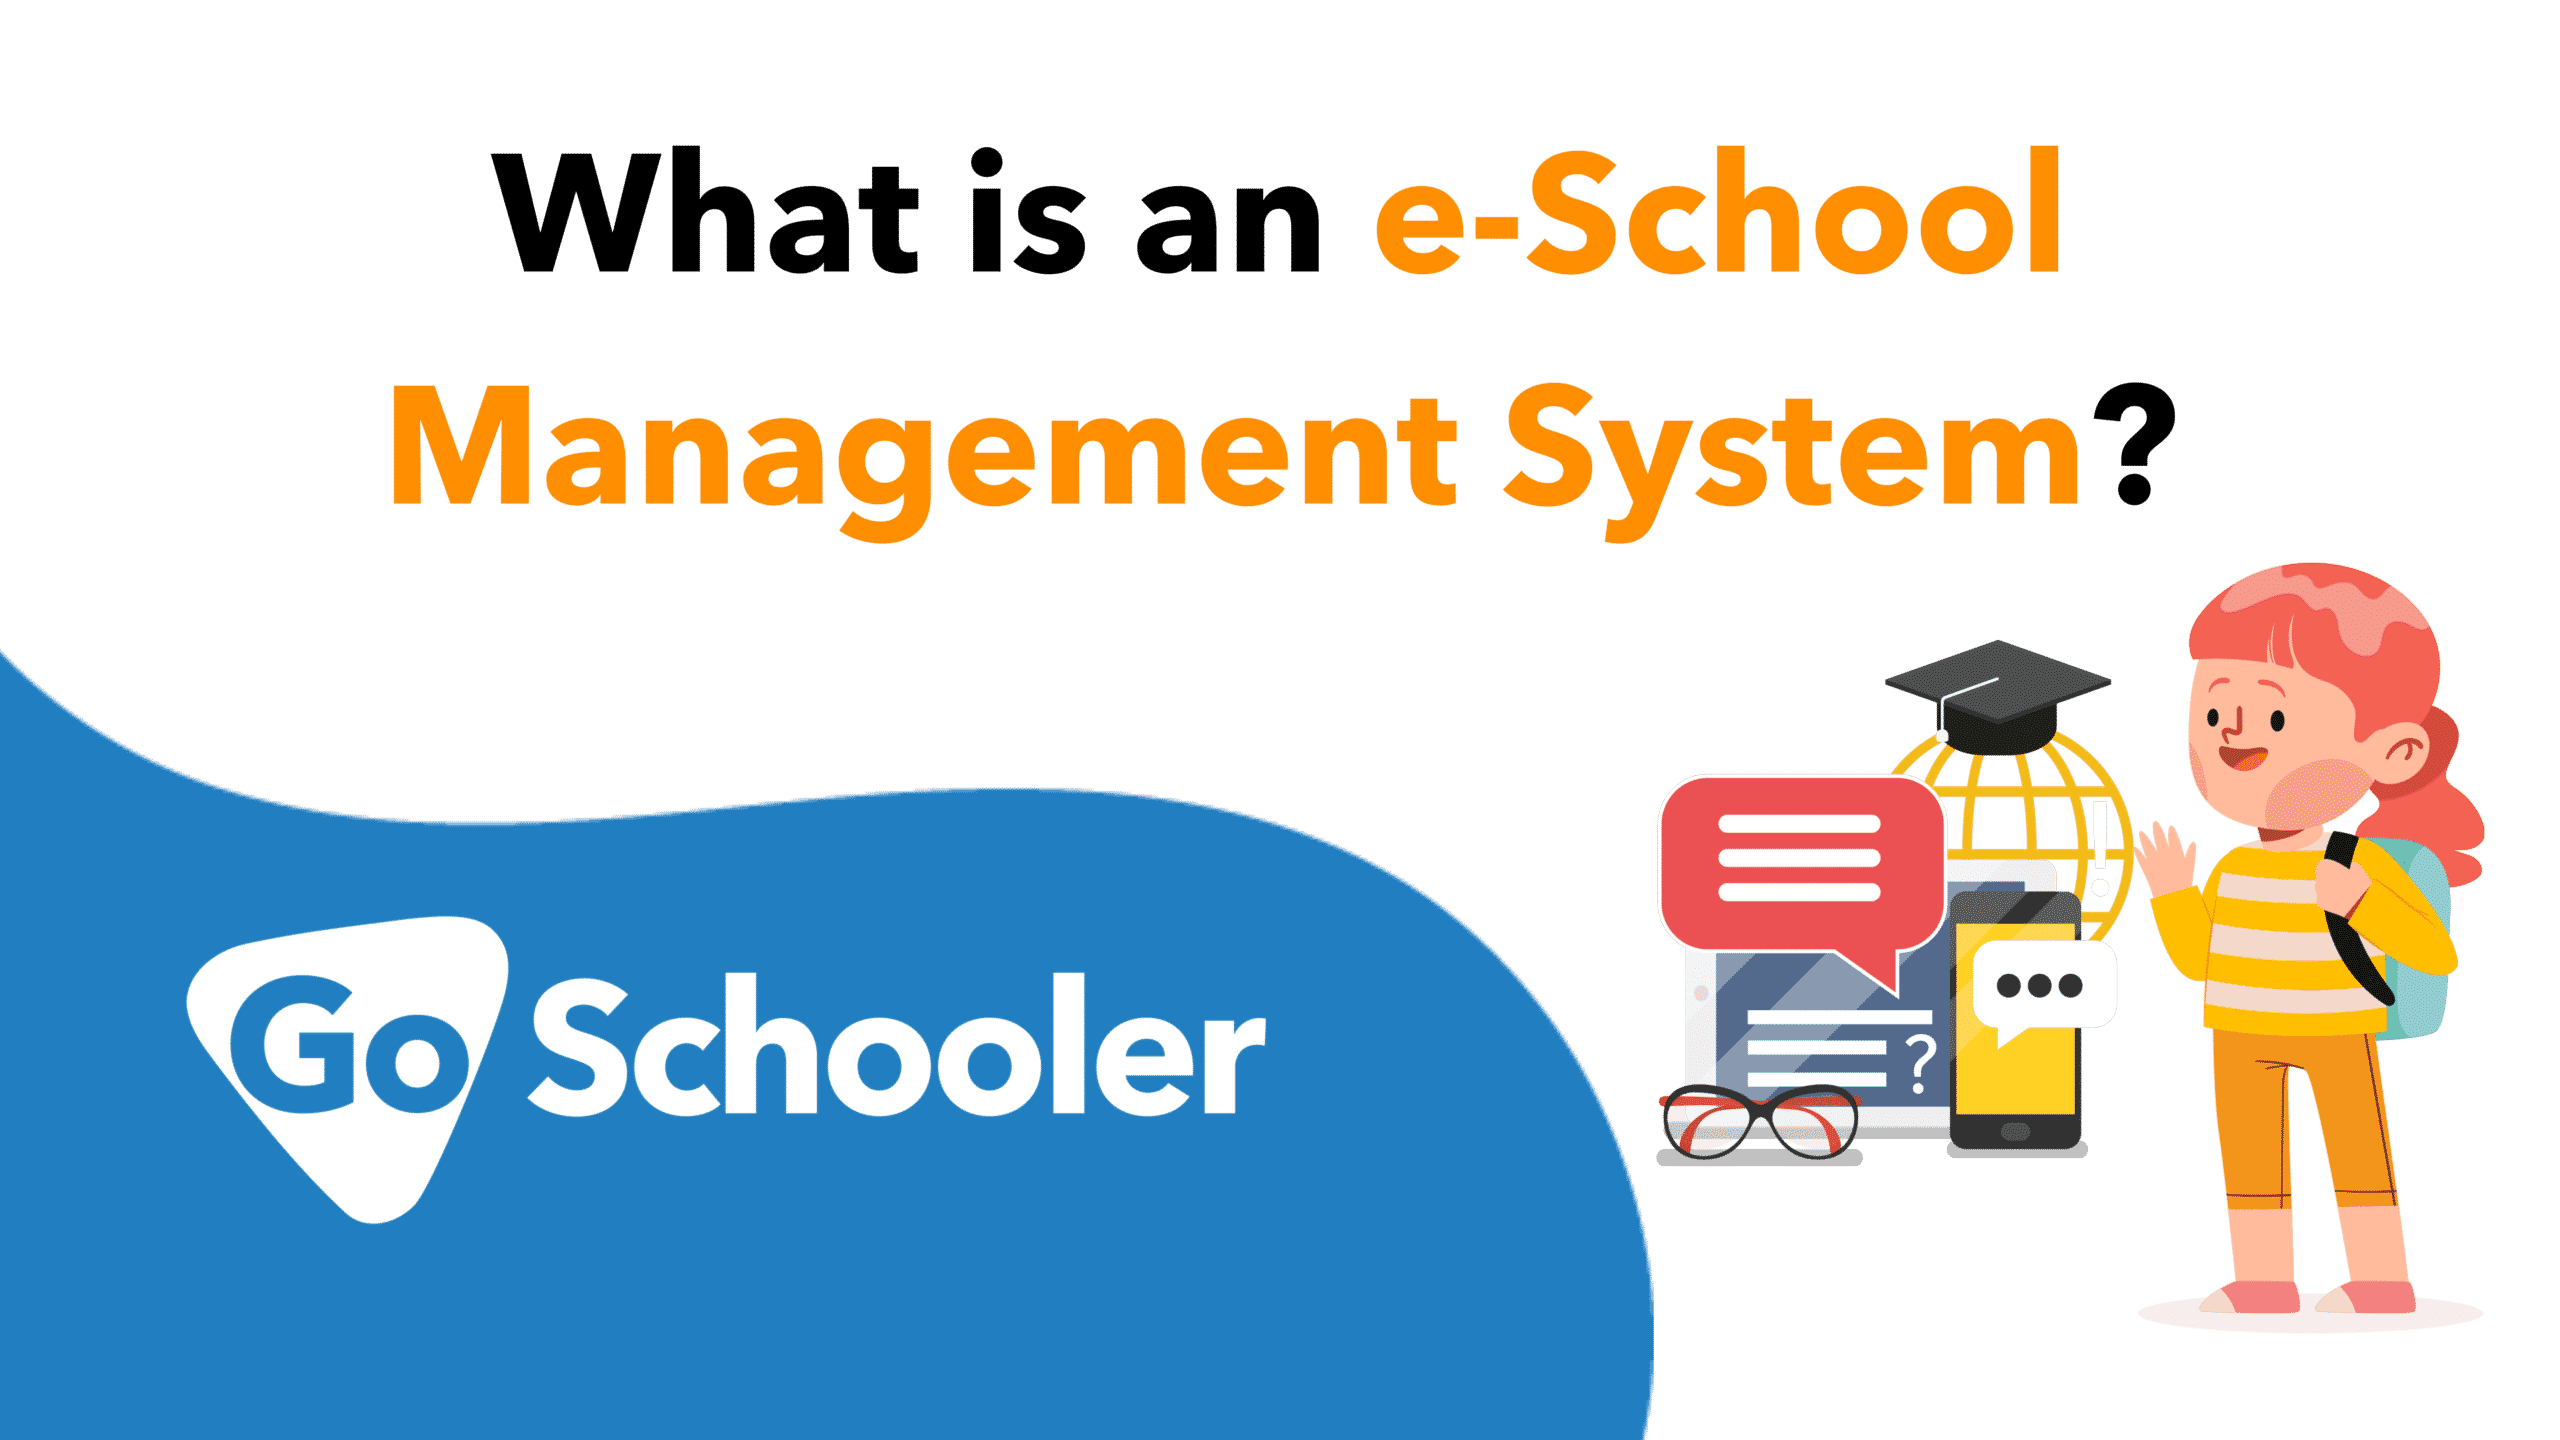 e-School Management System